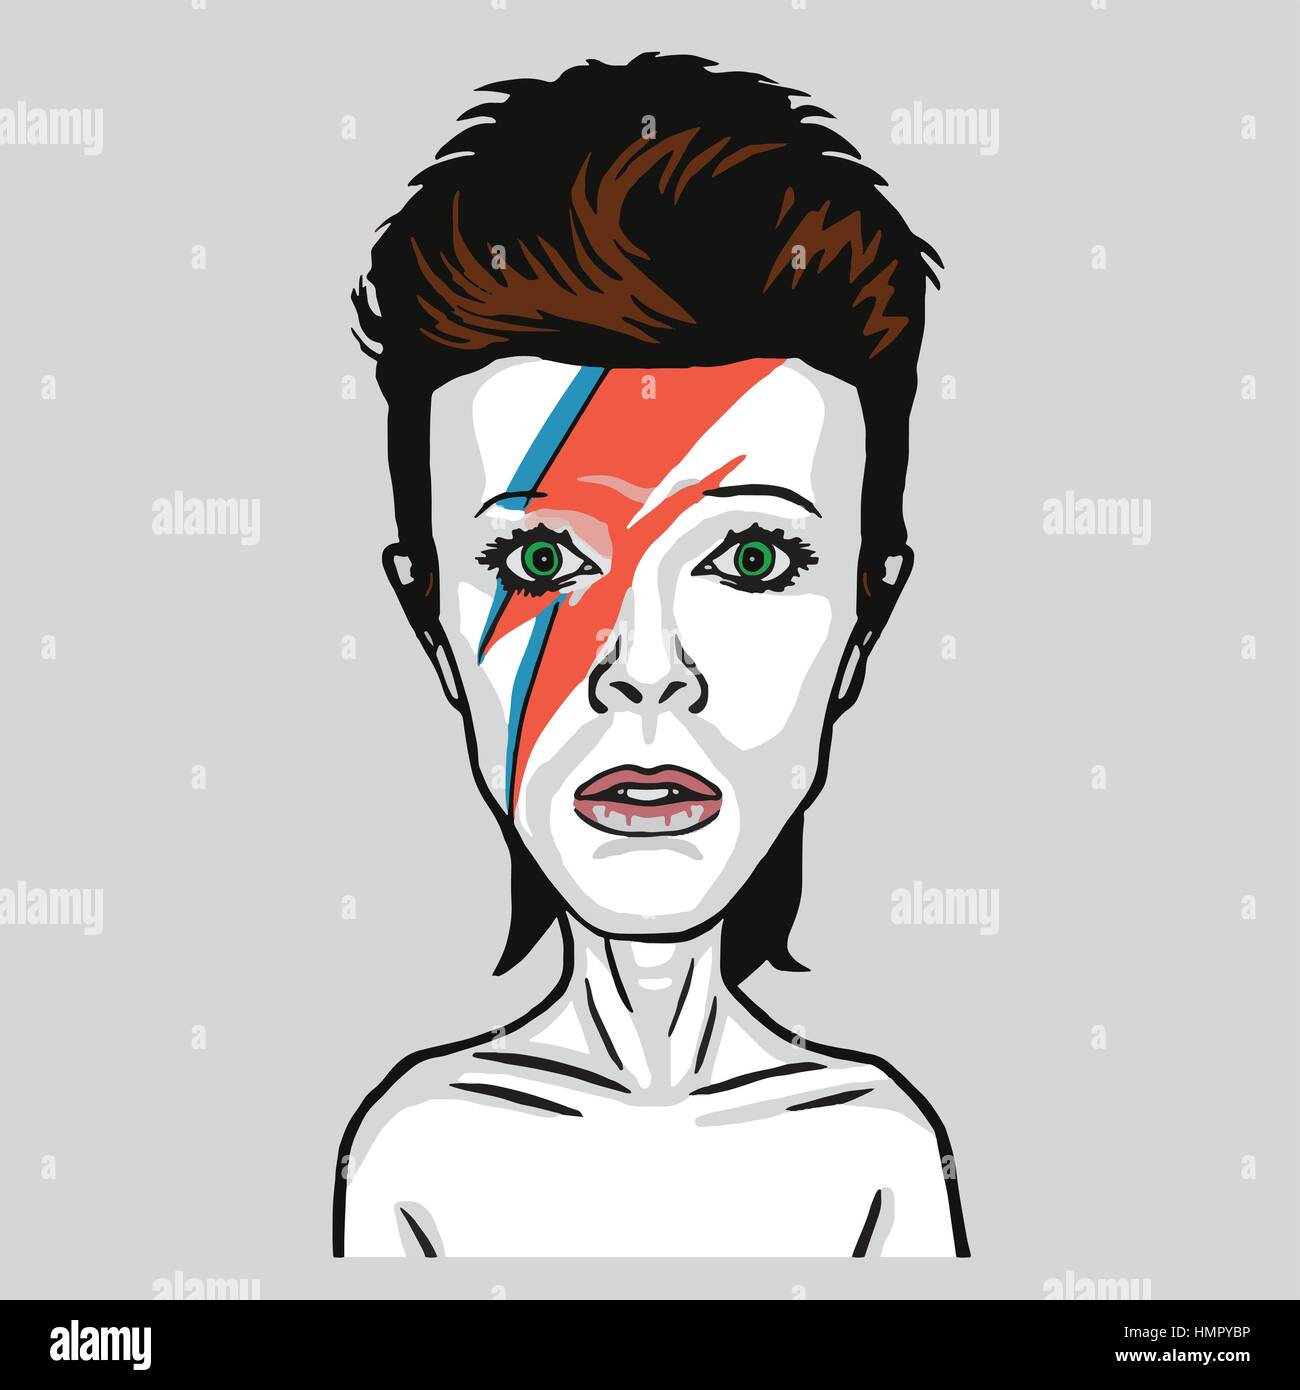 David Bowie Pop Art Vector Portrait Illustration Stock Vector